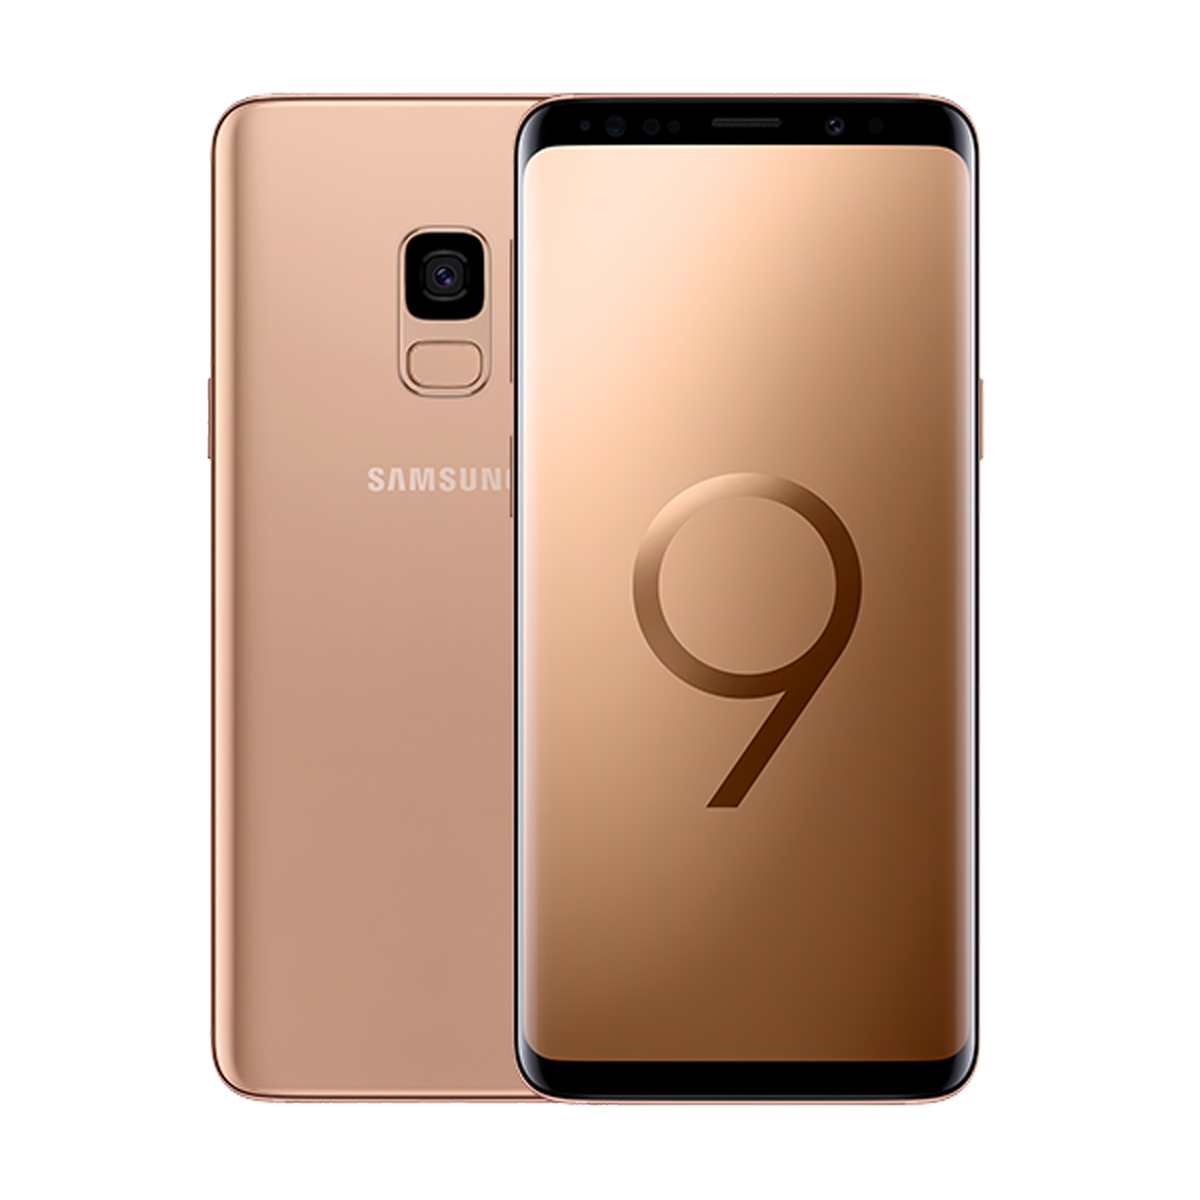 Refurbished Samsung Galaxy S9 64 GB Gold C-grade